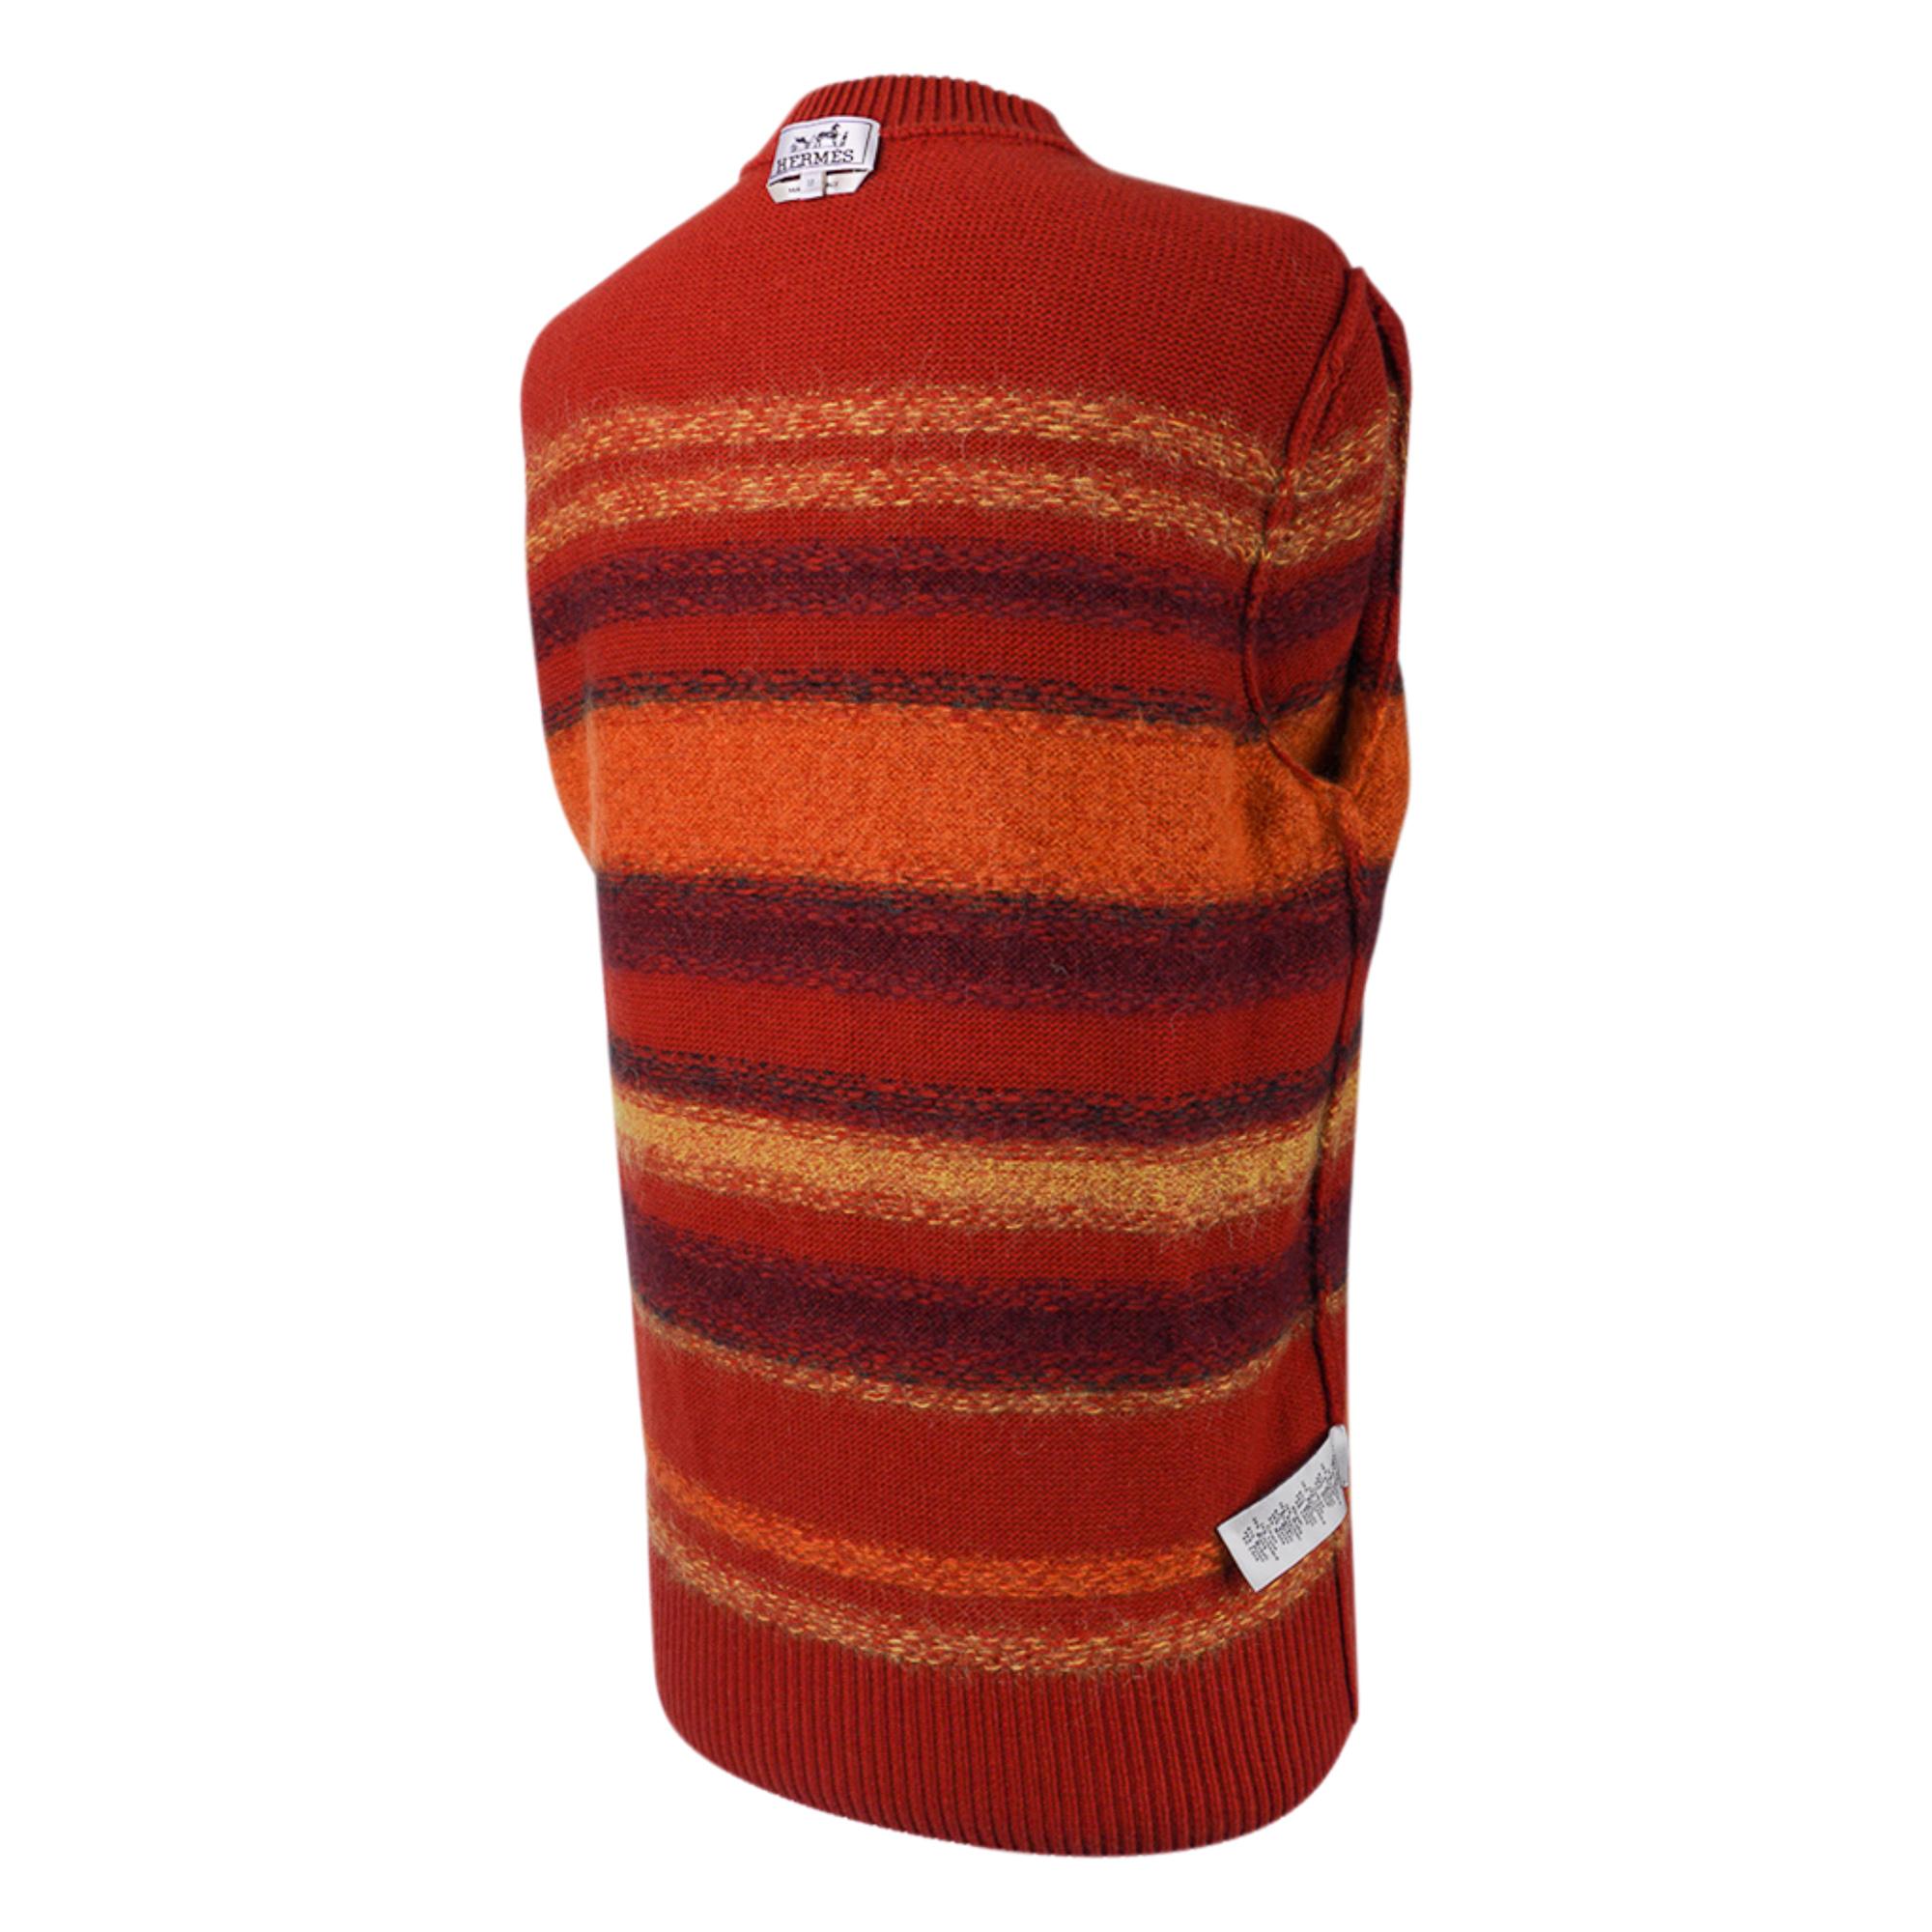 Hermes Men's Sweater Rayures Fondues (Melted Stripes) Orange Brulee Wool M For Sale 2